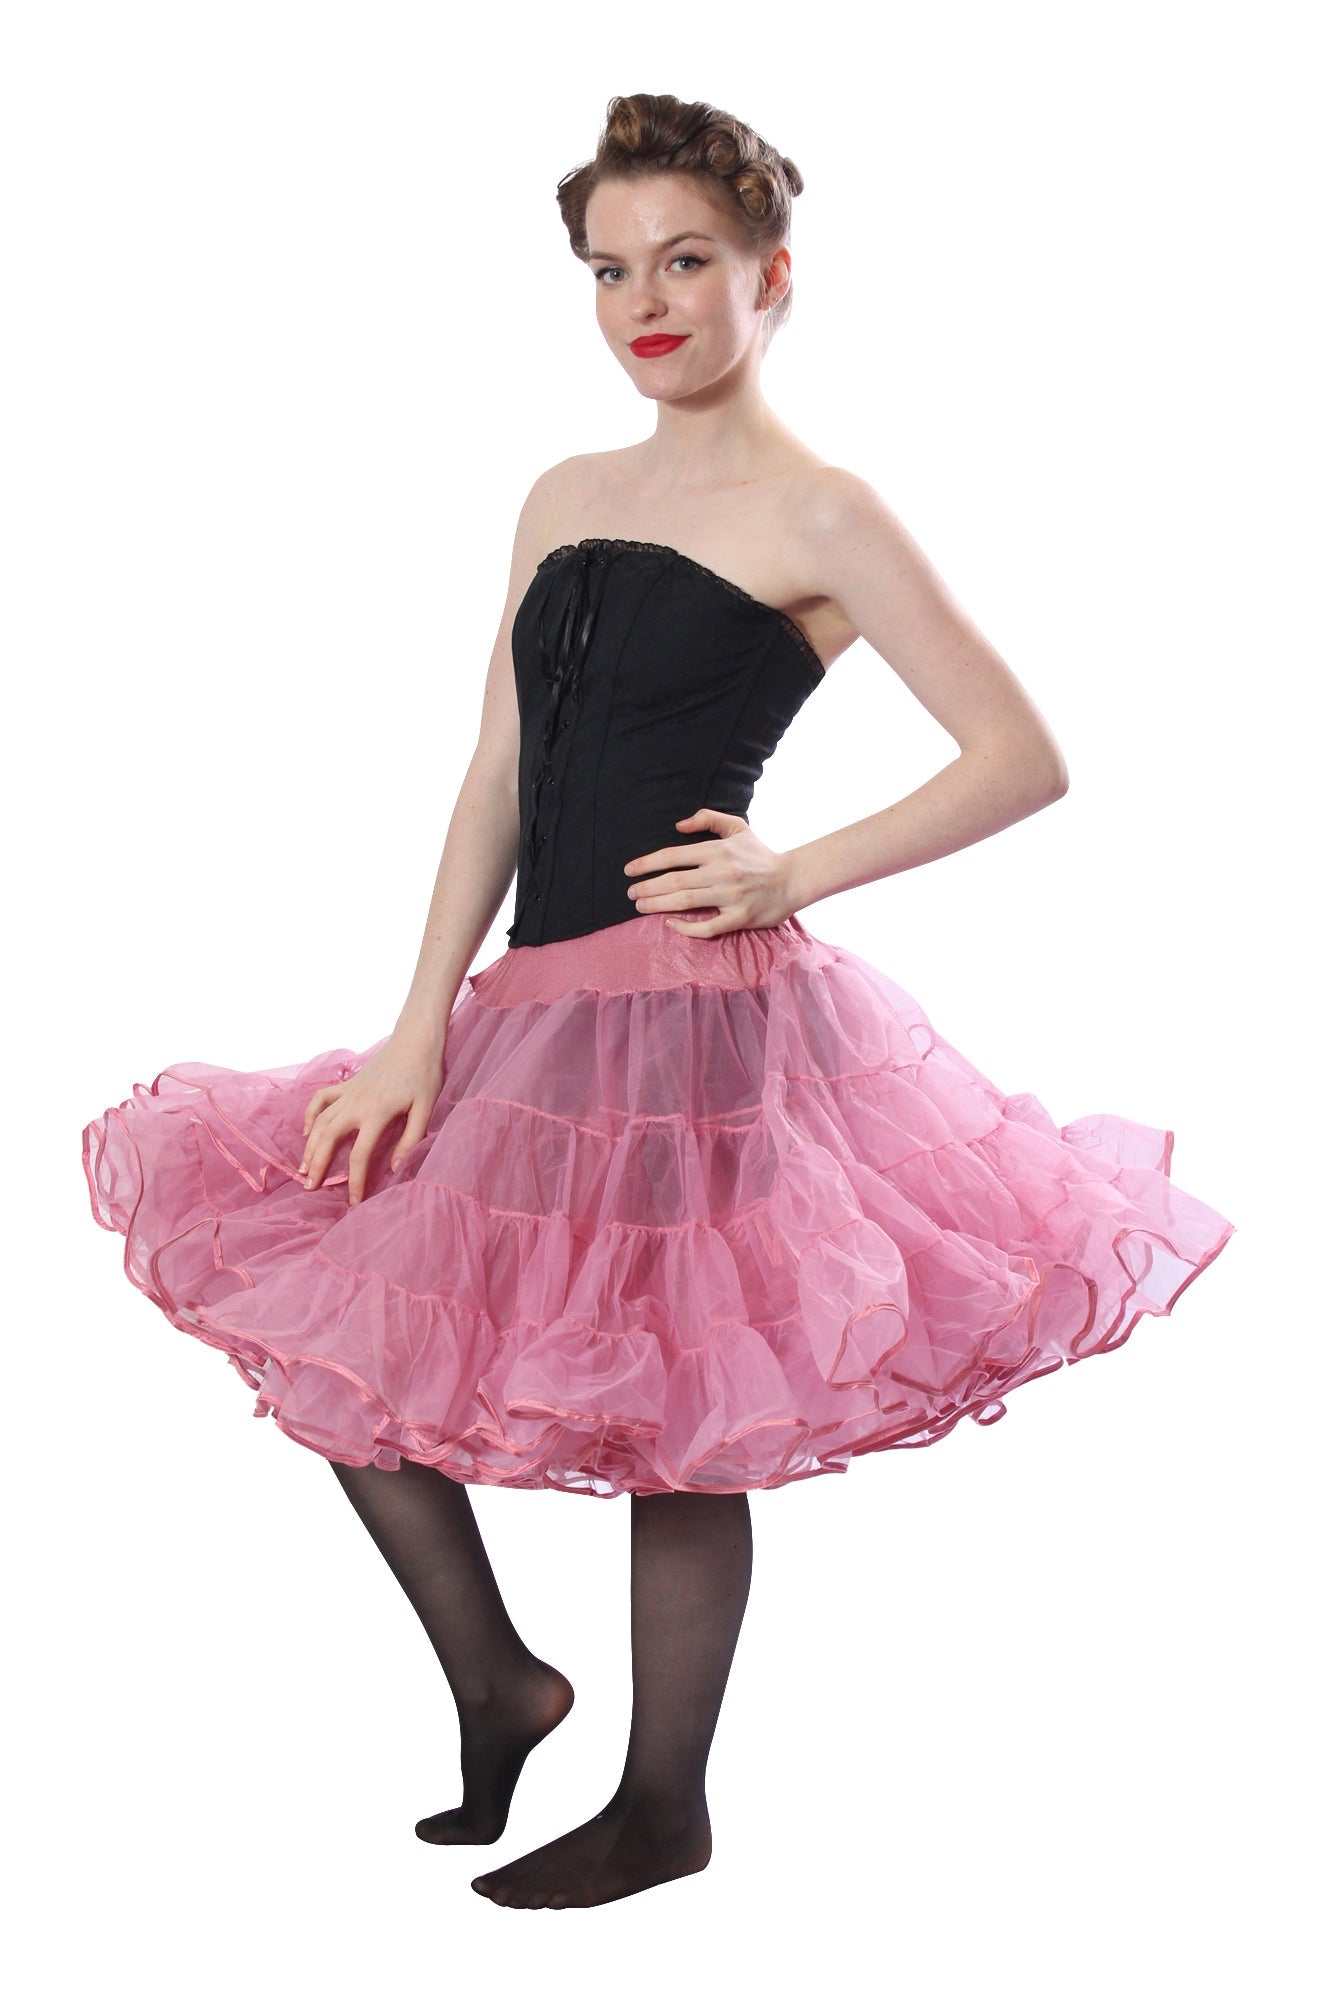 N565 Women's Vintage Sexy Madeline Petticoats - Dusty Rose